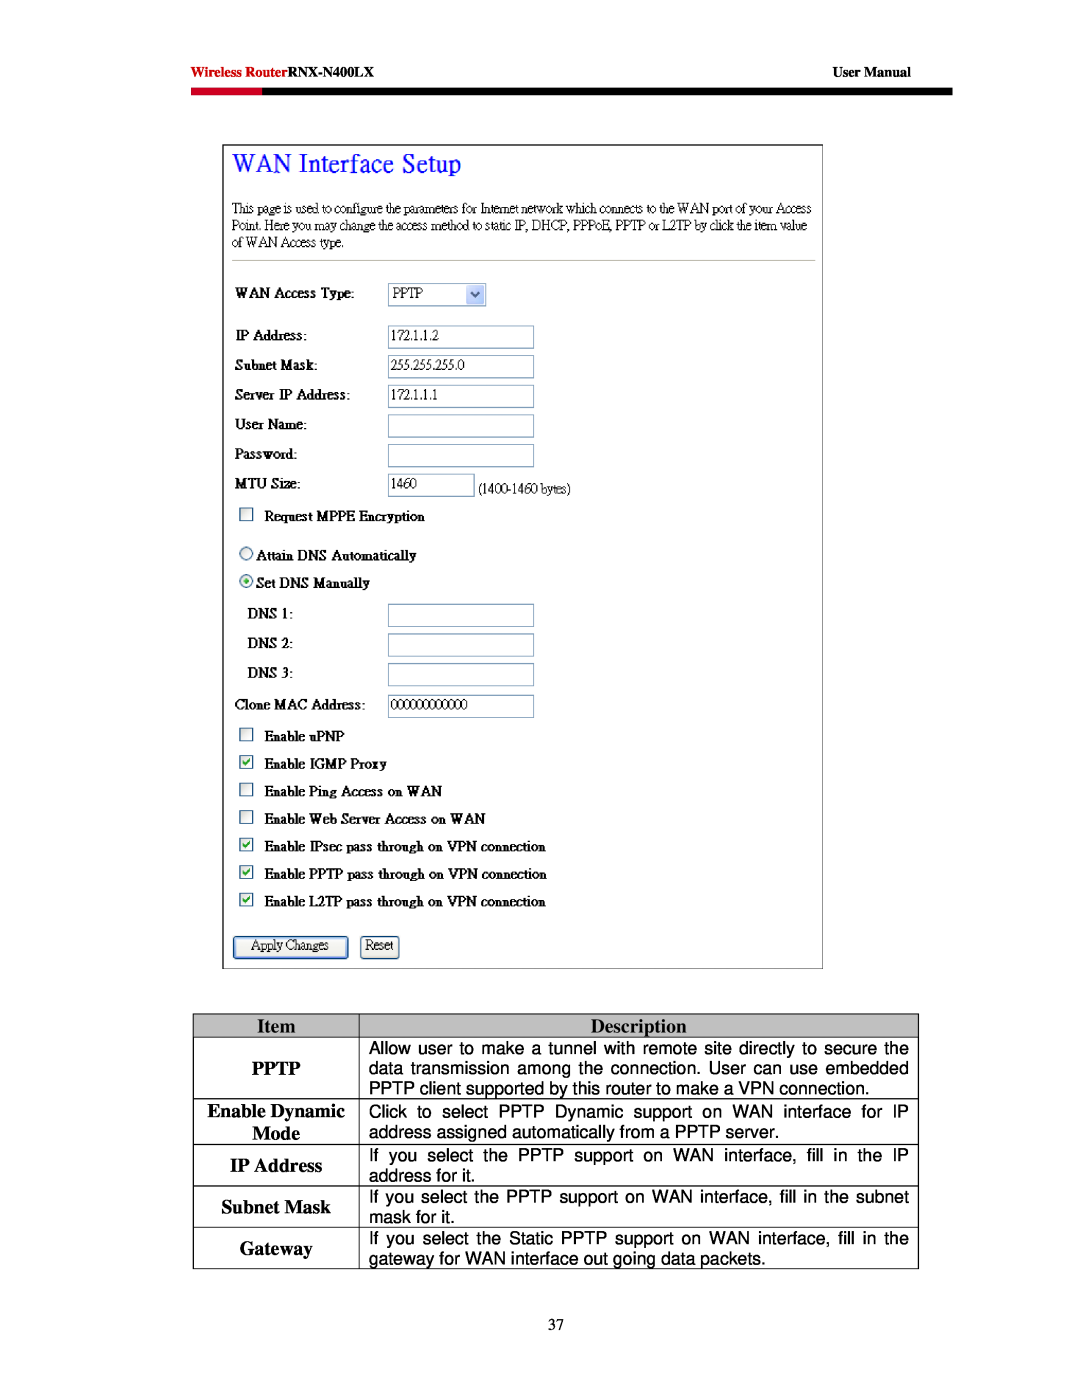 Rosewill RNX-N400LX user manual Description, Pptp, Gateway, Enable Dynamic, Mode, IP Address, Subnet Mask 